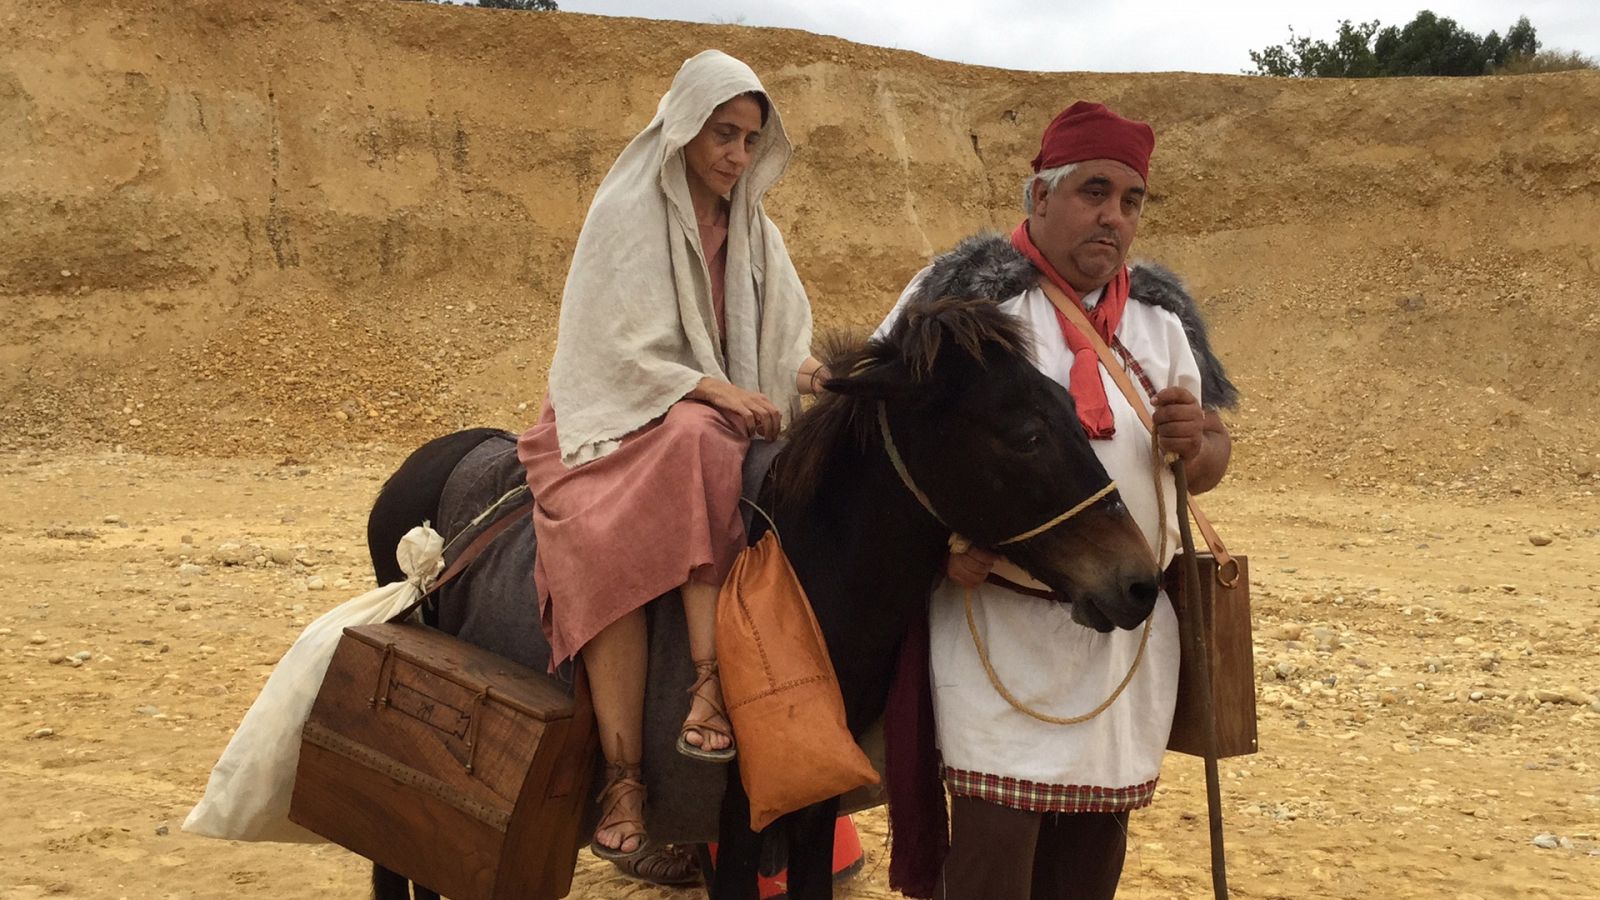 Somos documentales - Egeria la primera peregrina